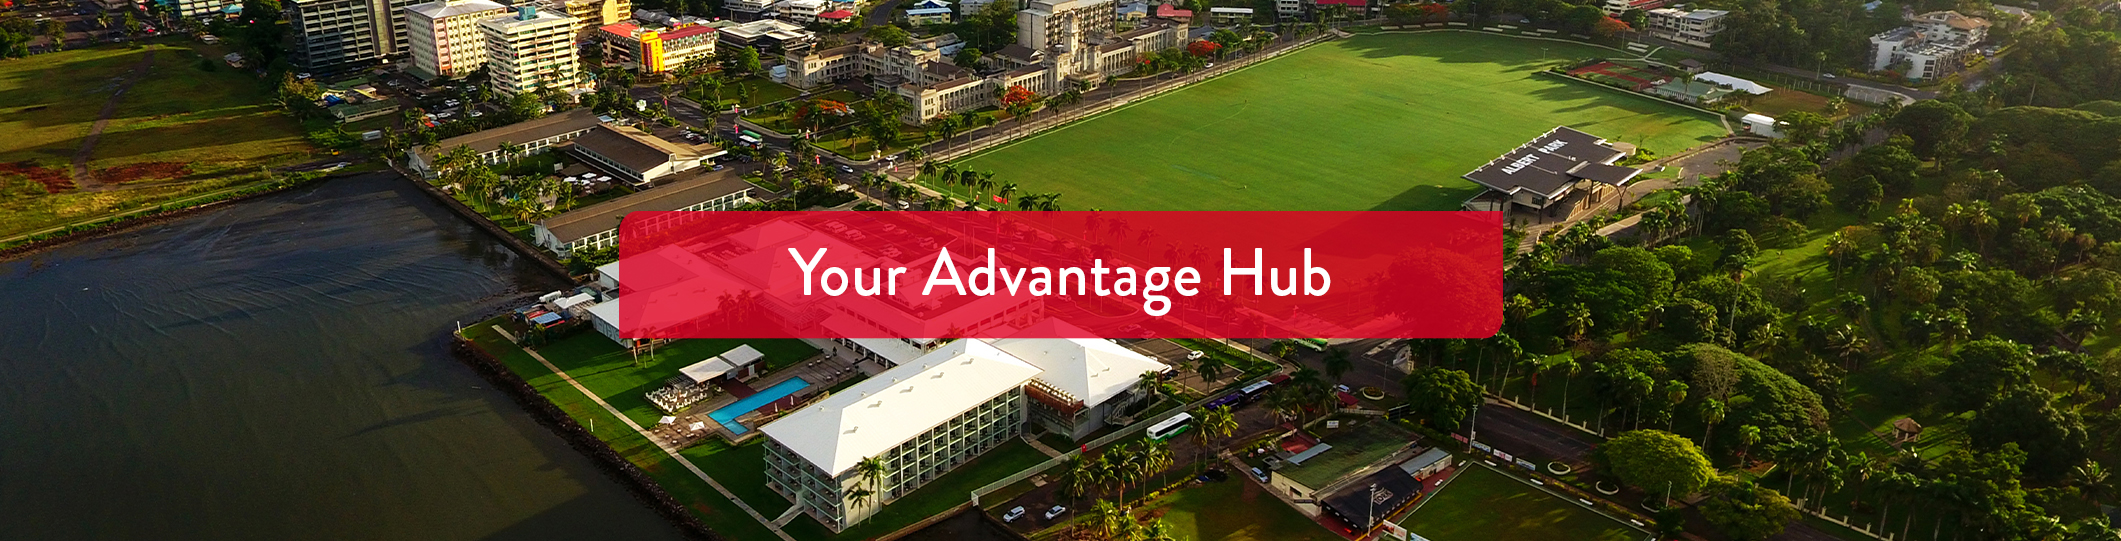 Your Advantage Hub